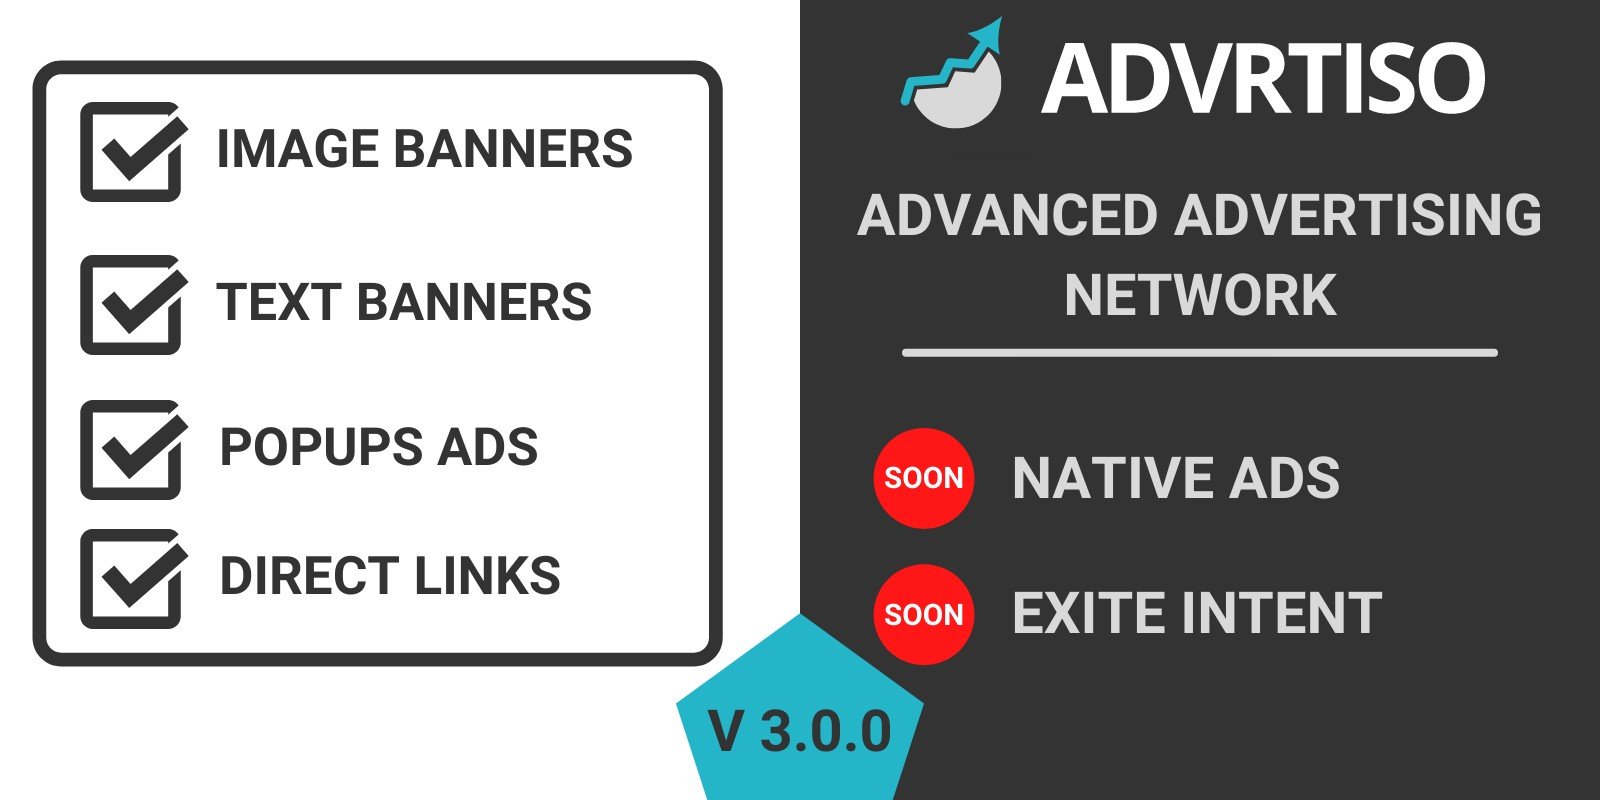 AdVartiso - Advanced Advertising Network PHP